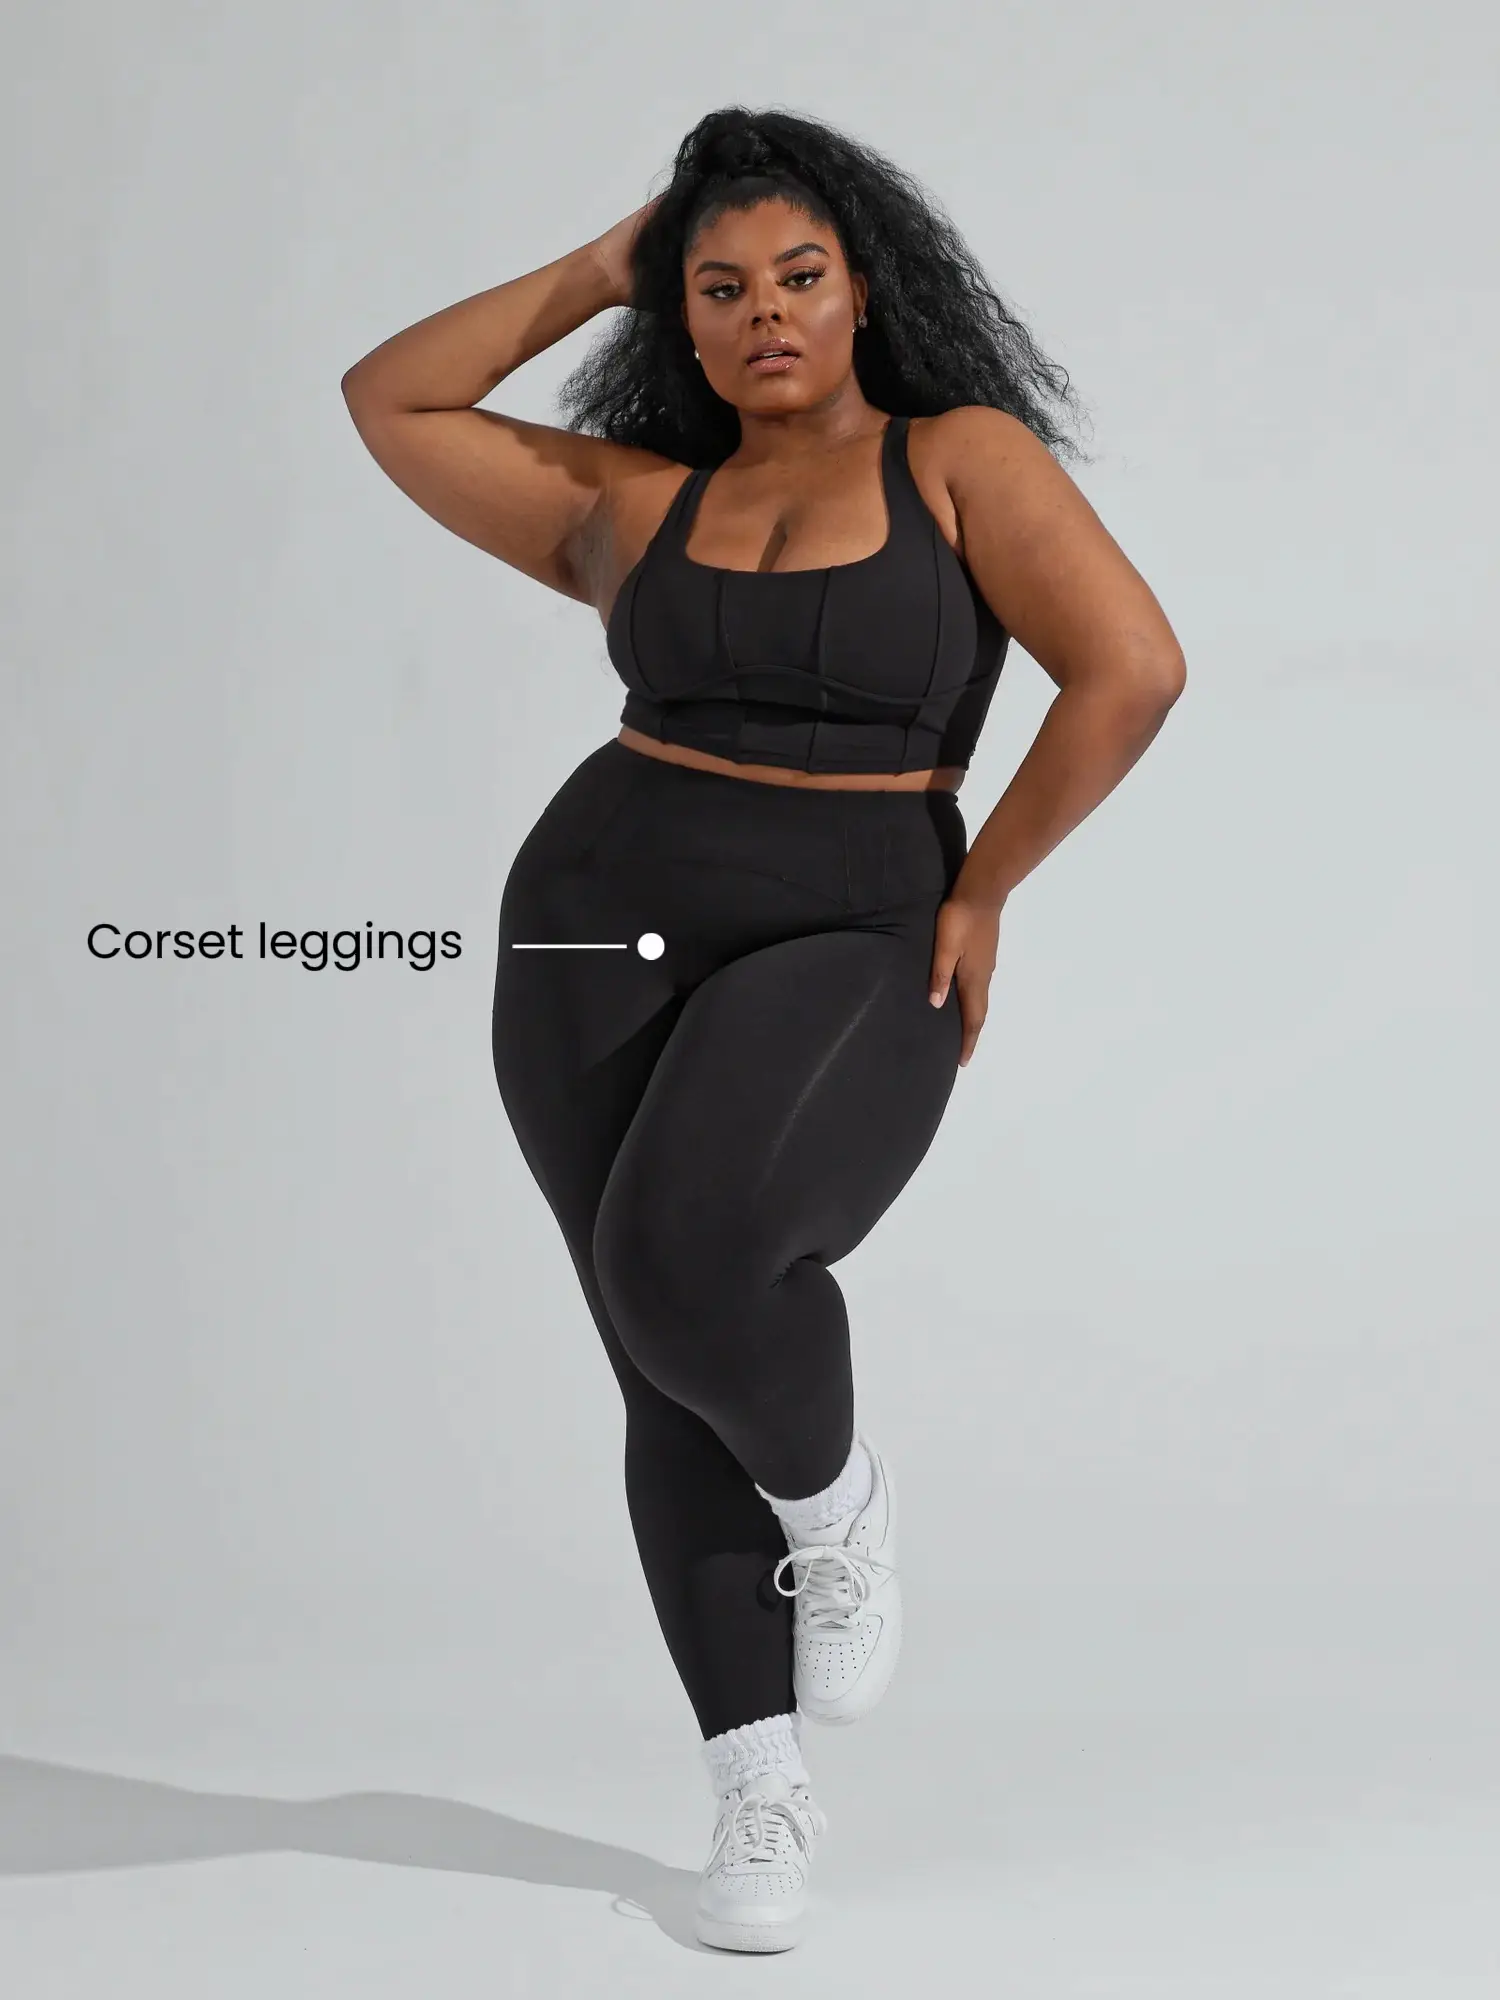 Buy Hi Clasmix Plus Size Leggings for Women 1X-4X-High Waisted Tummy Control  Workout Super Soft Black Leggings Yoga Pants at